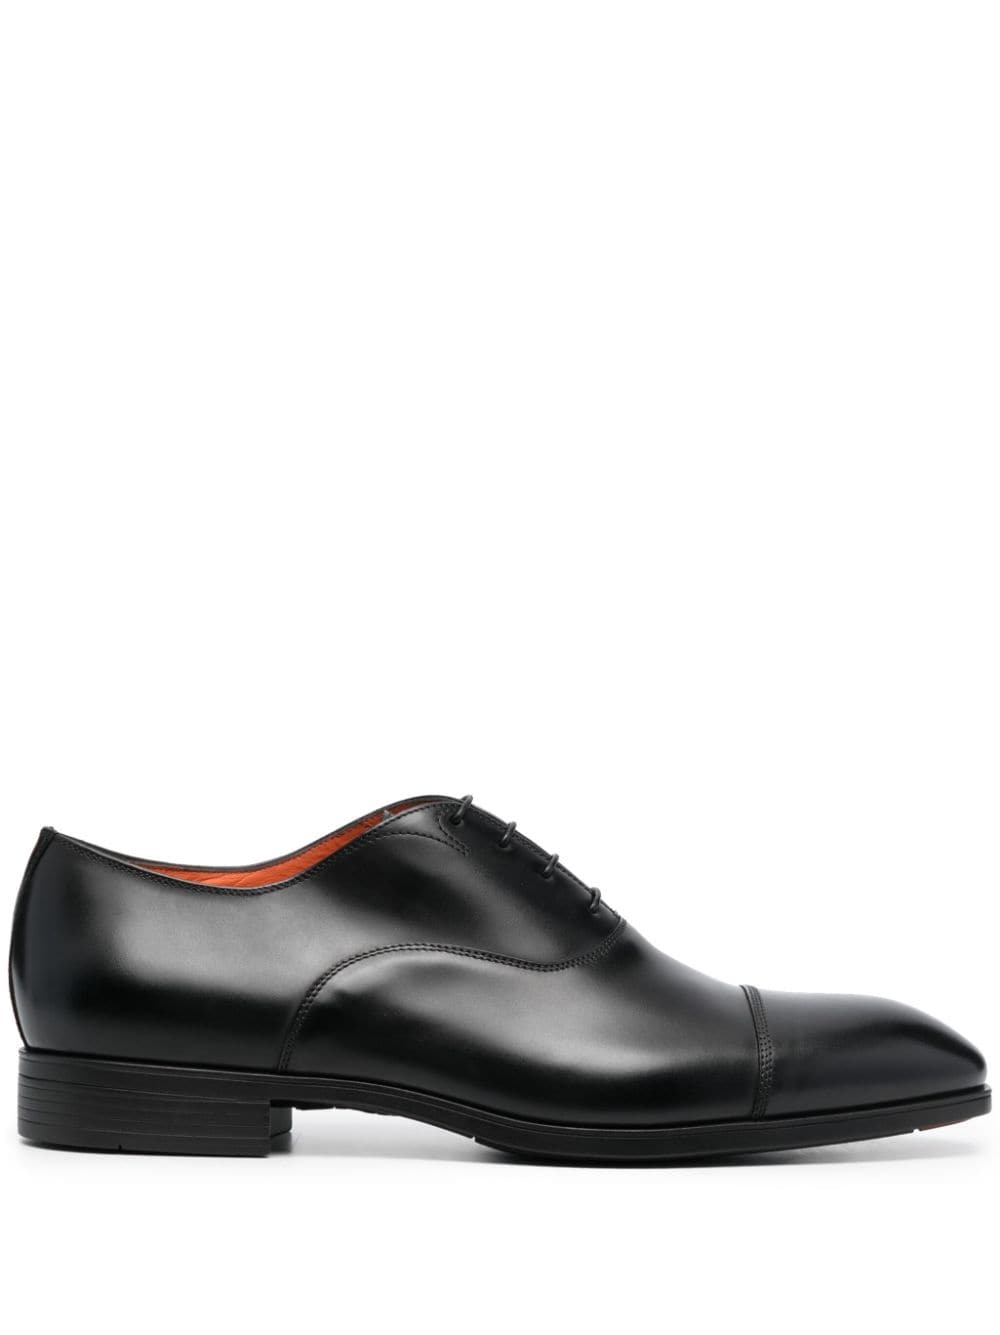 Santoni leather Oxford shoes - Black